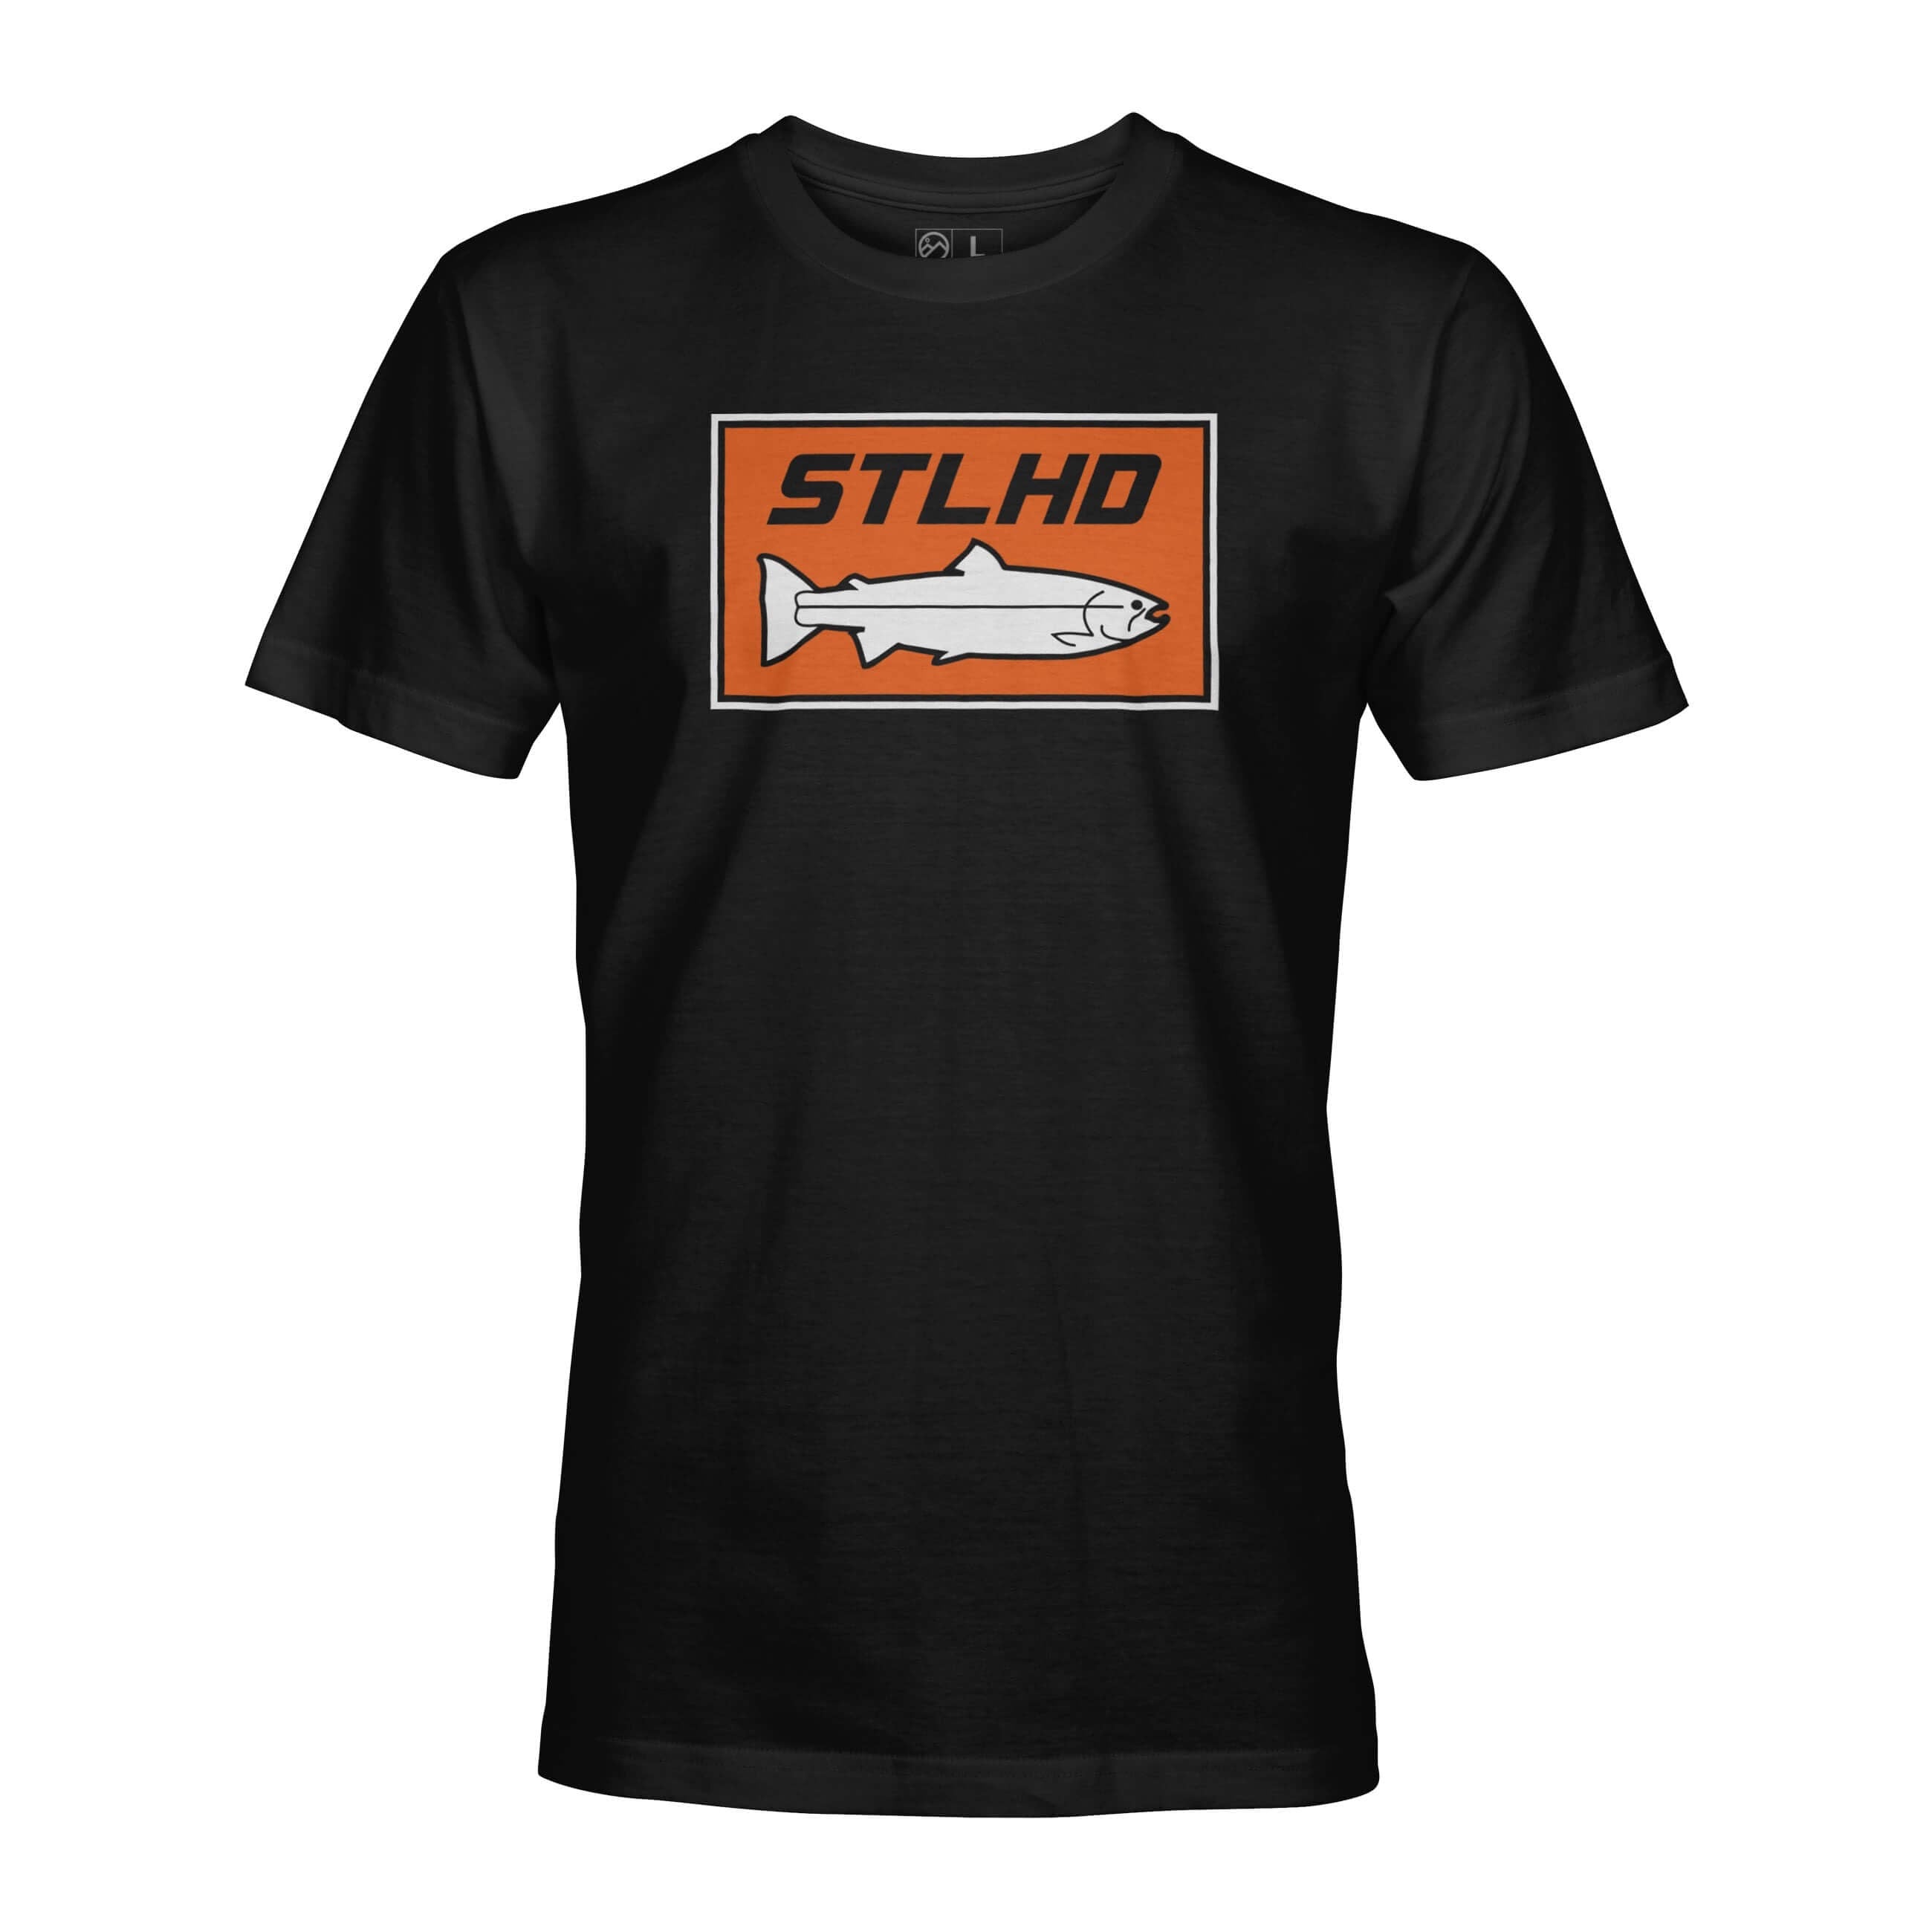 STLHD Men's Standard Logo T-Shirt, Black